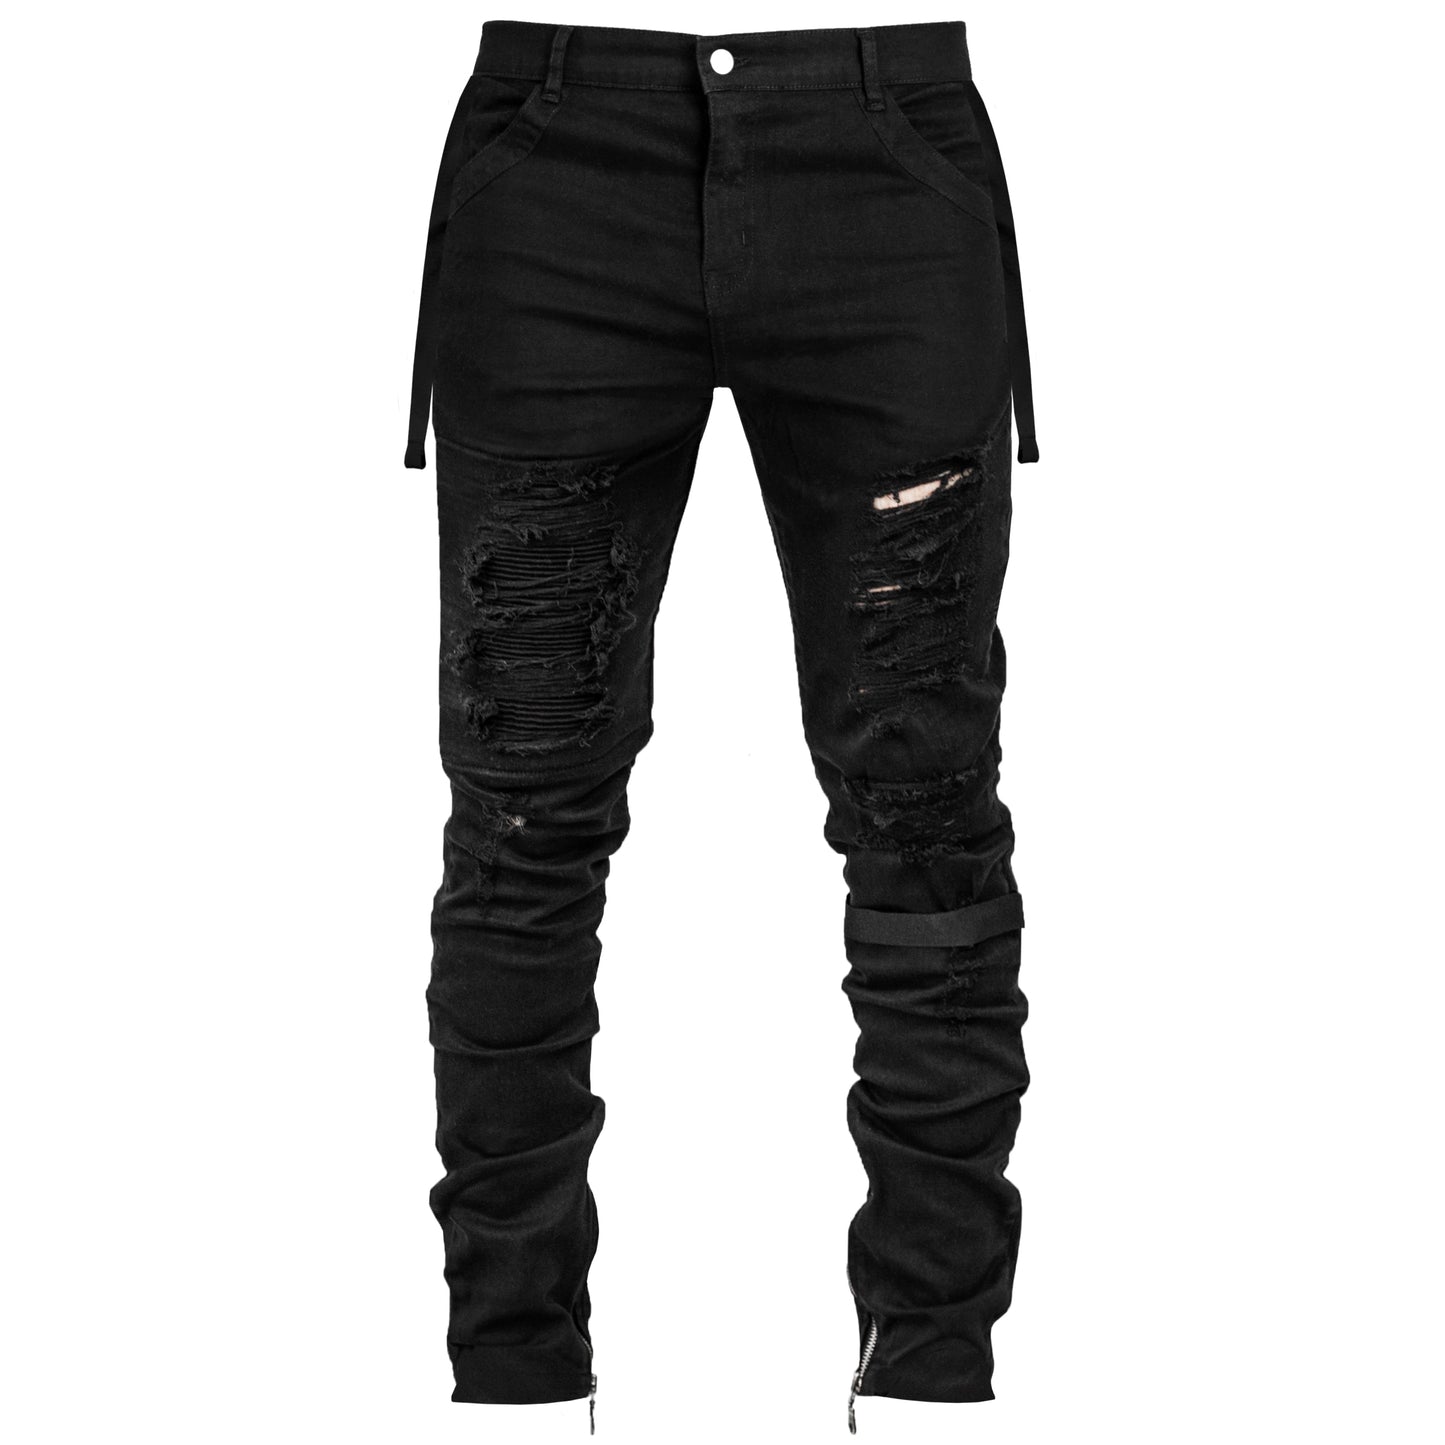 Asymmetric Ankle Zip Jeans : Black